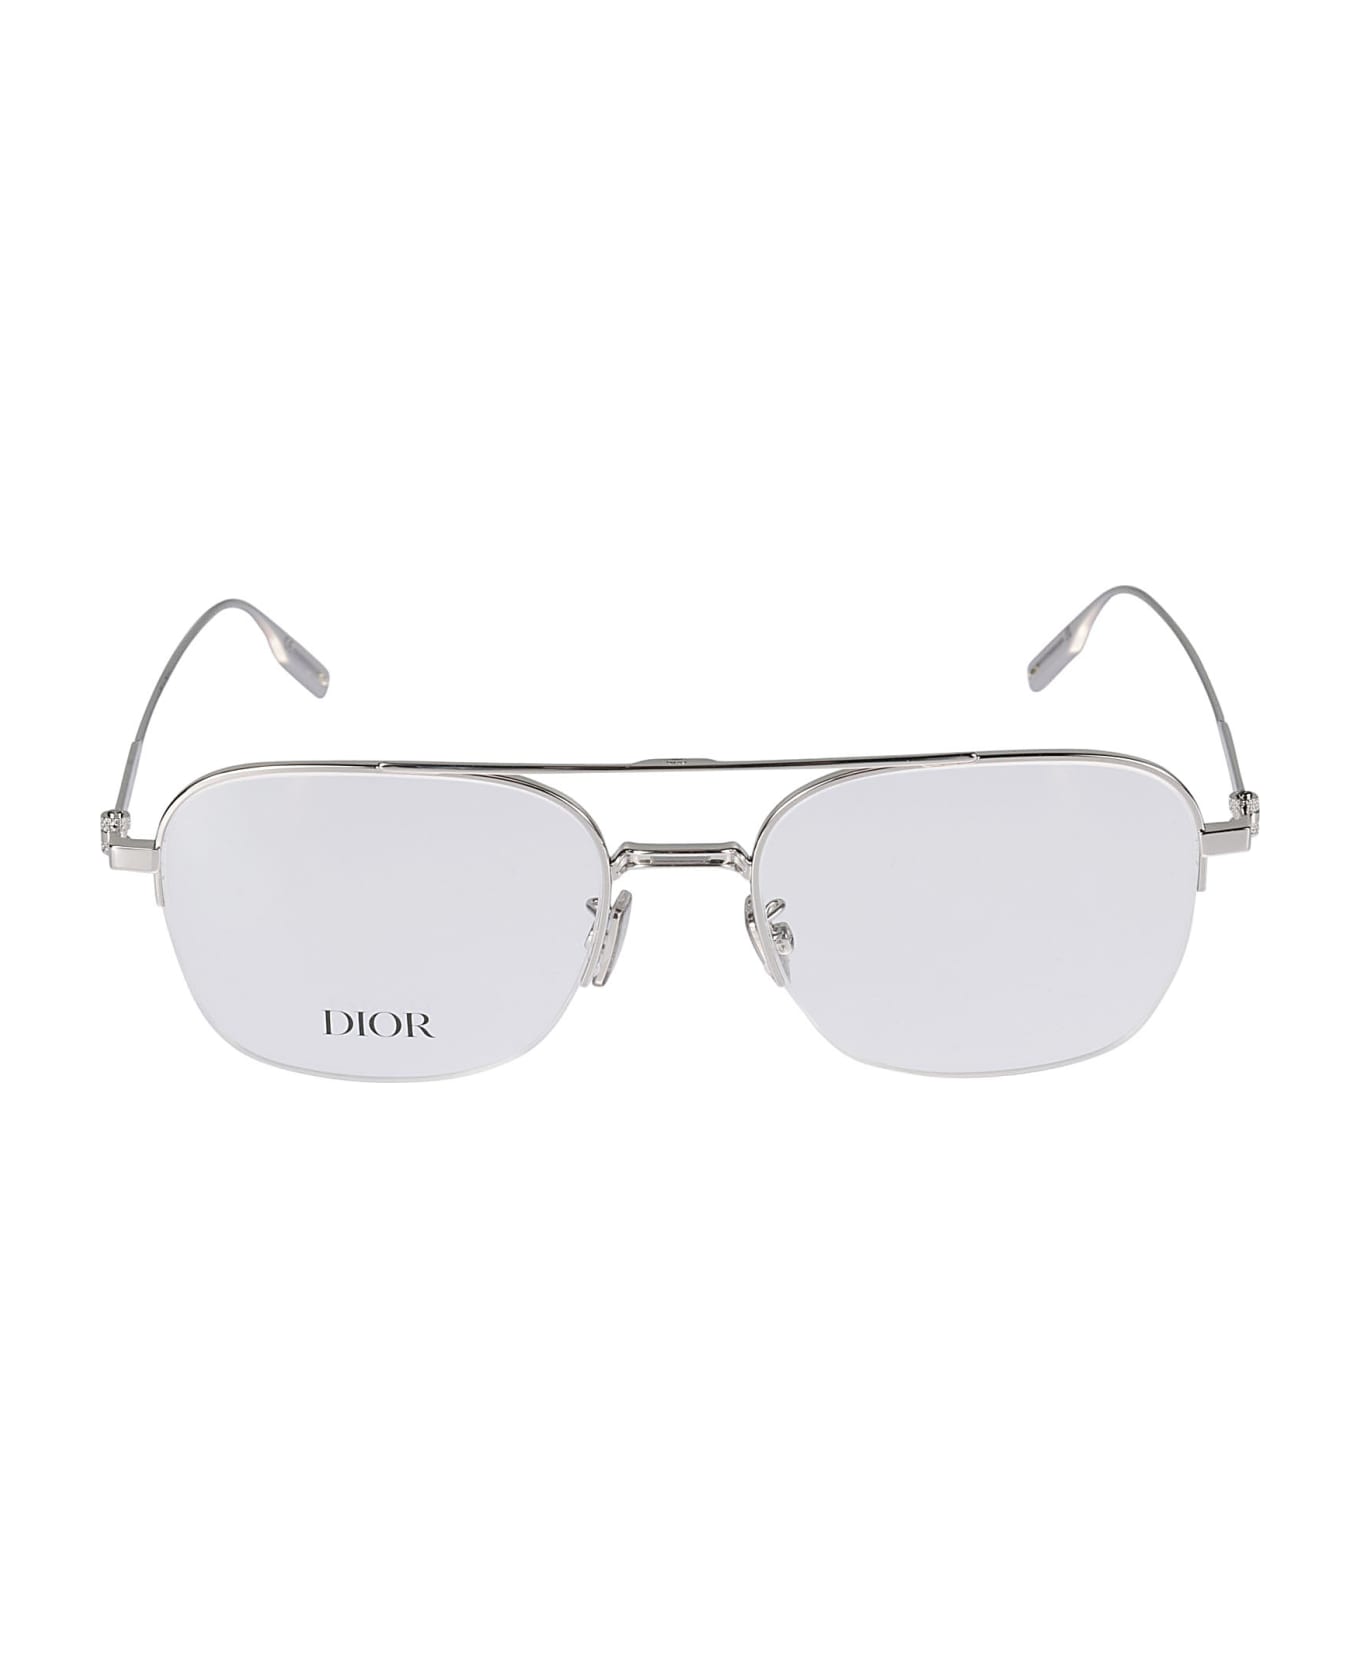 Dior Eyewear Neo Dior Glasses - f000